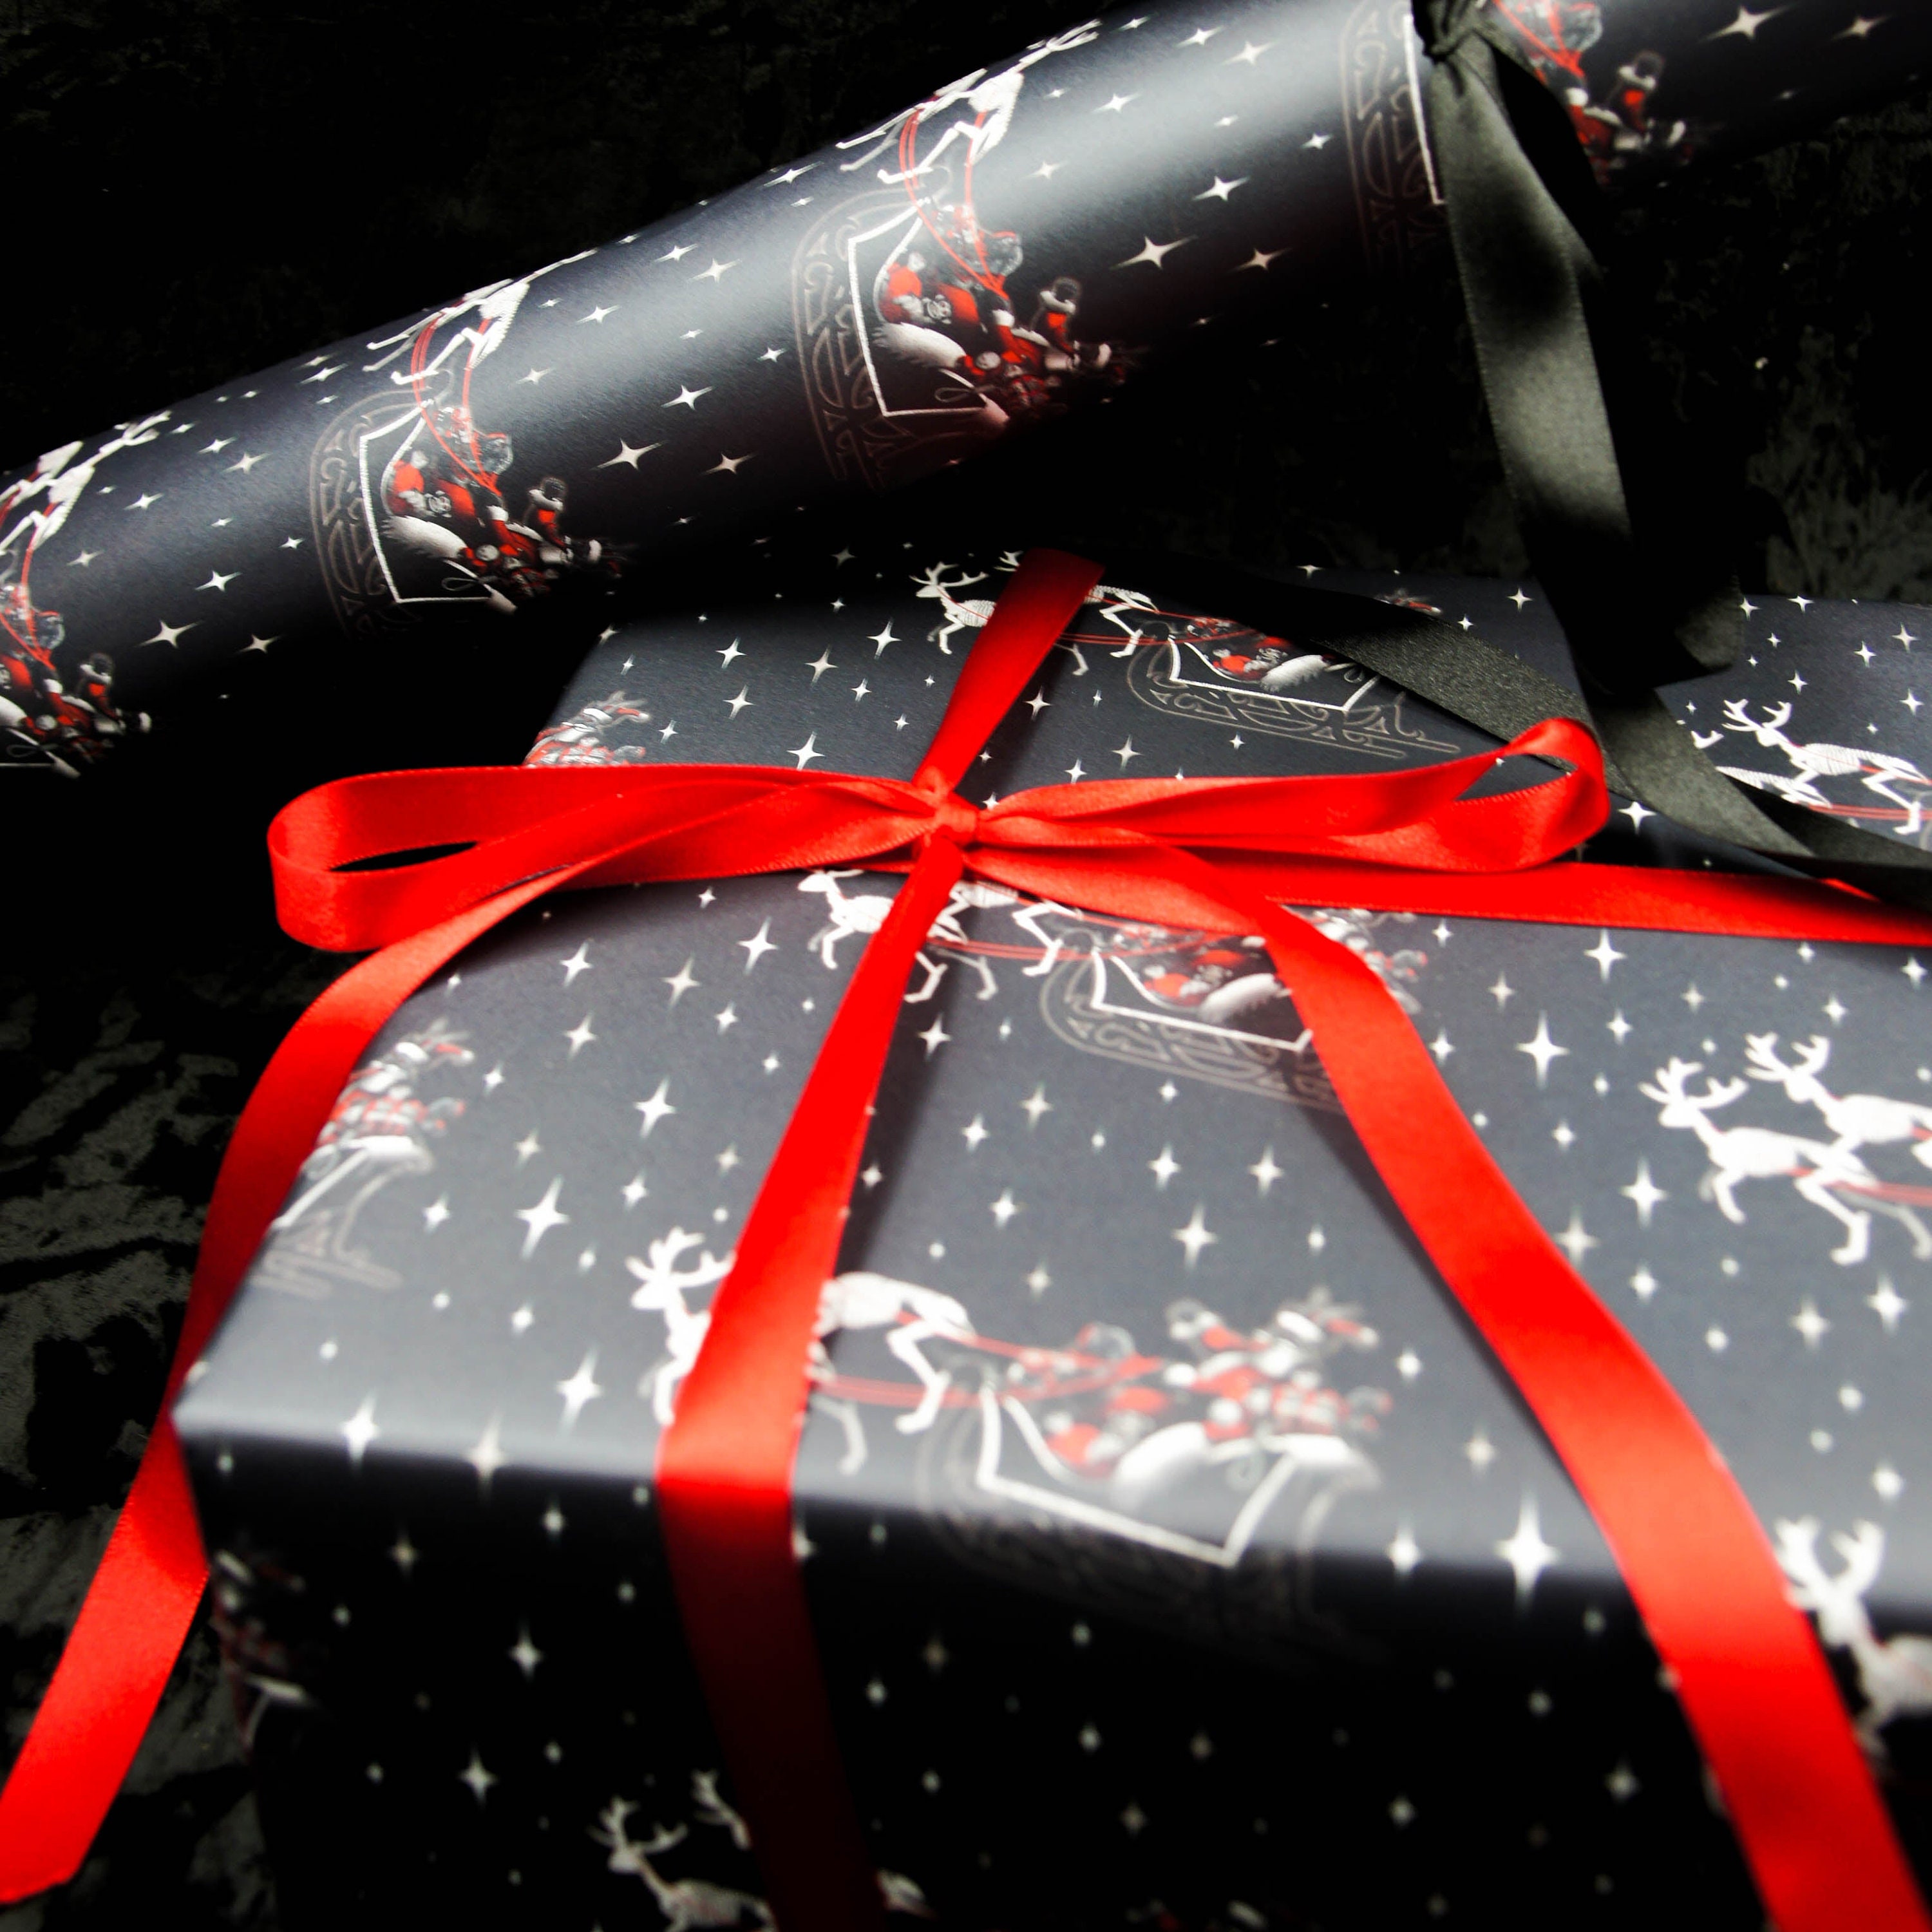 Krampus Christmas Wrapping Paper – Alexandria Noël